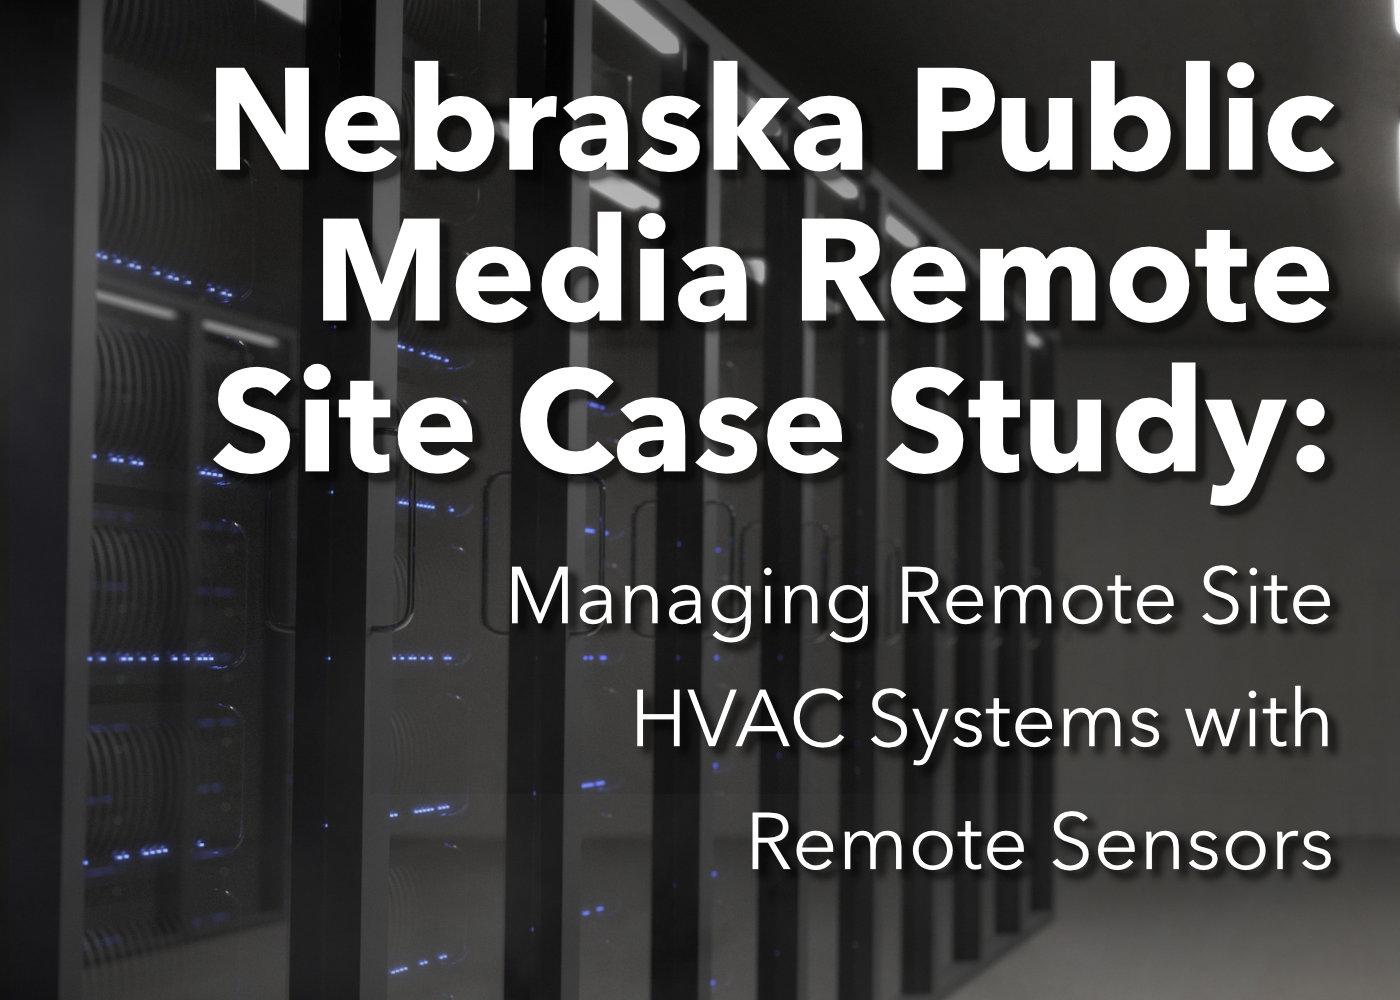 Nebraska Public Media Remote Site Case Study